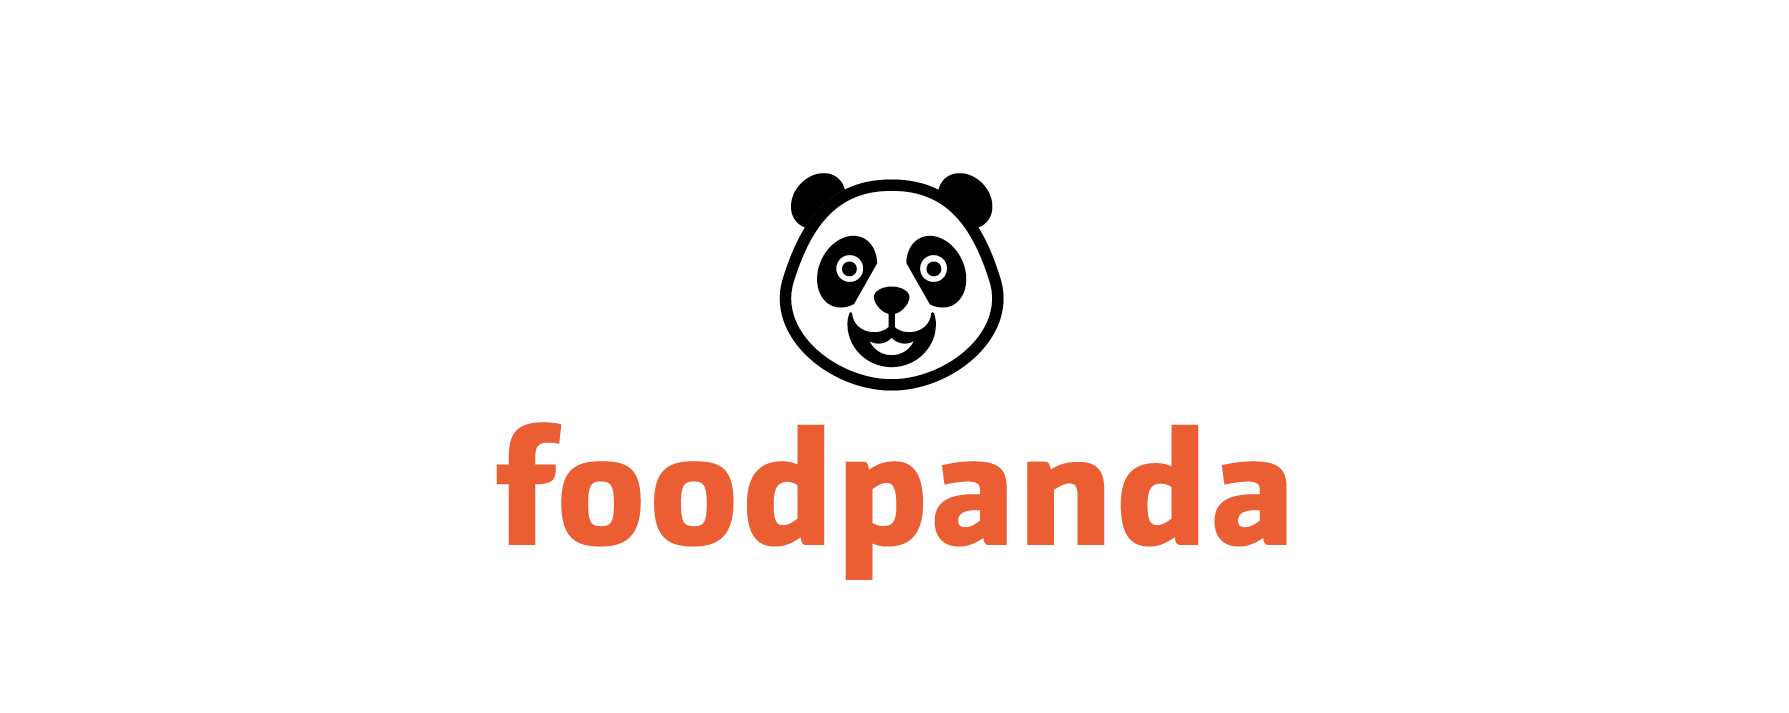 foodpanda Logo - My Christmas Eve lunch was saved by a panda – FOOD PANDA, that is ...